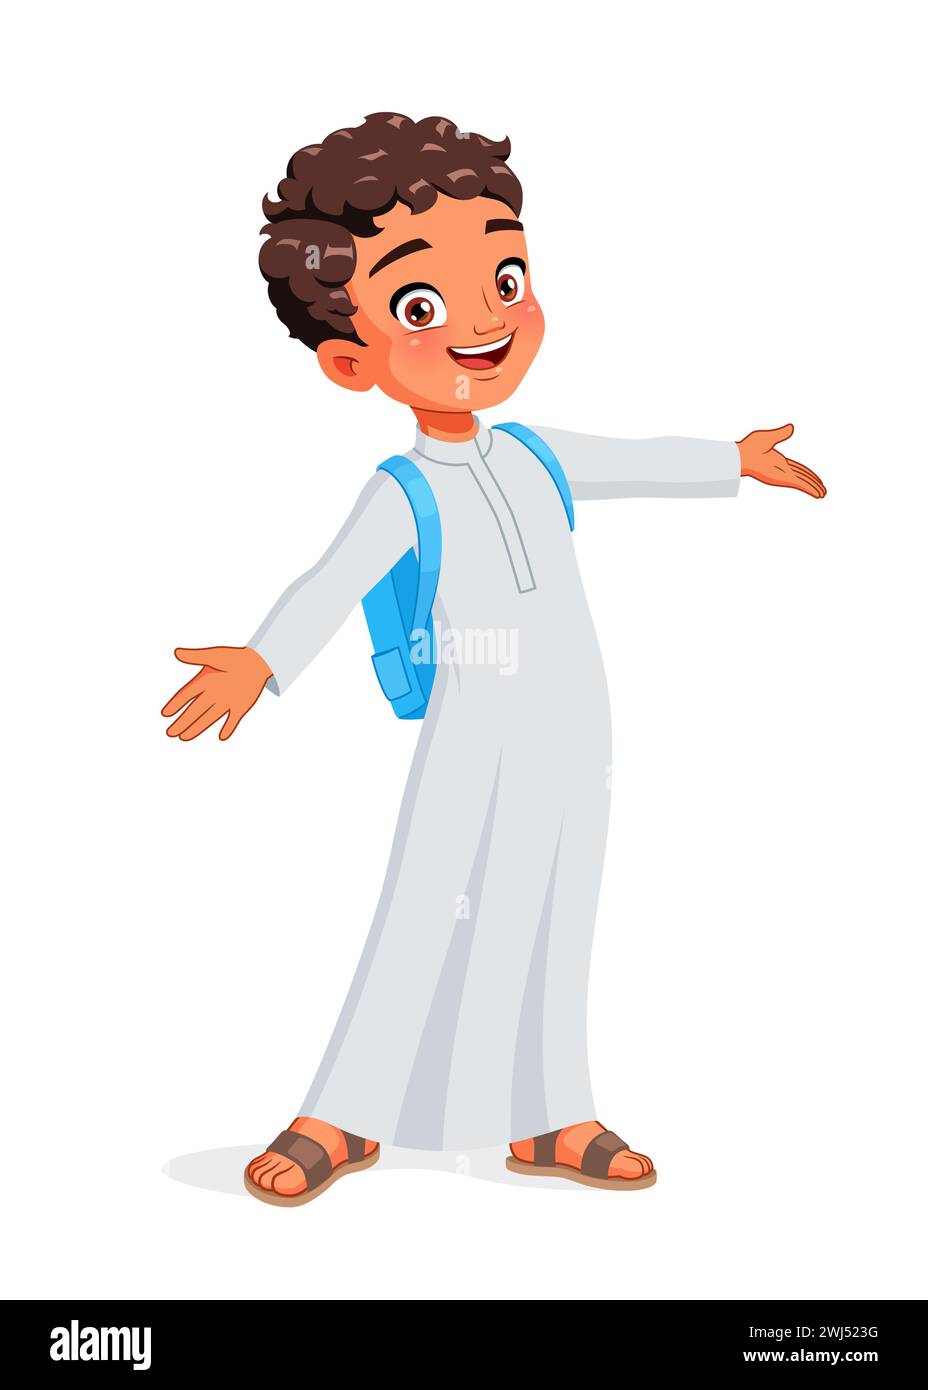 Arab school boy greeting with wide open arms. Cartoon vector illustration. Stock Vector